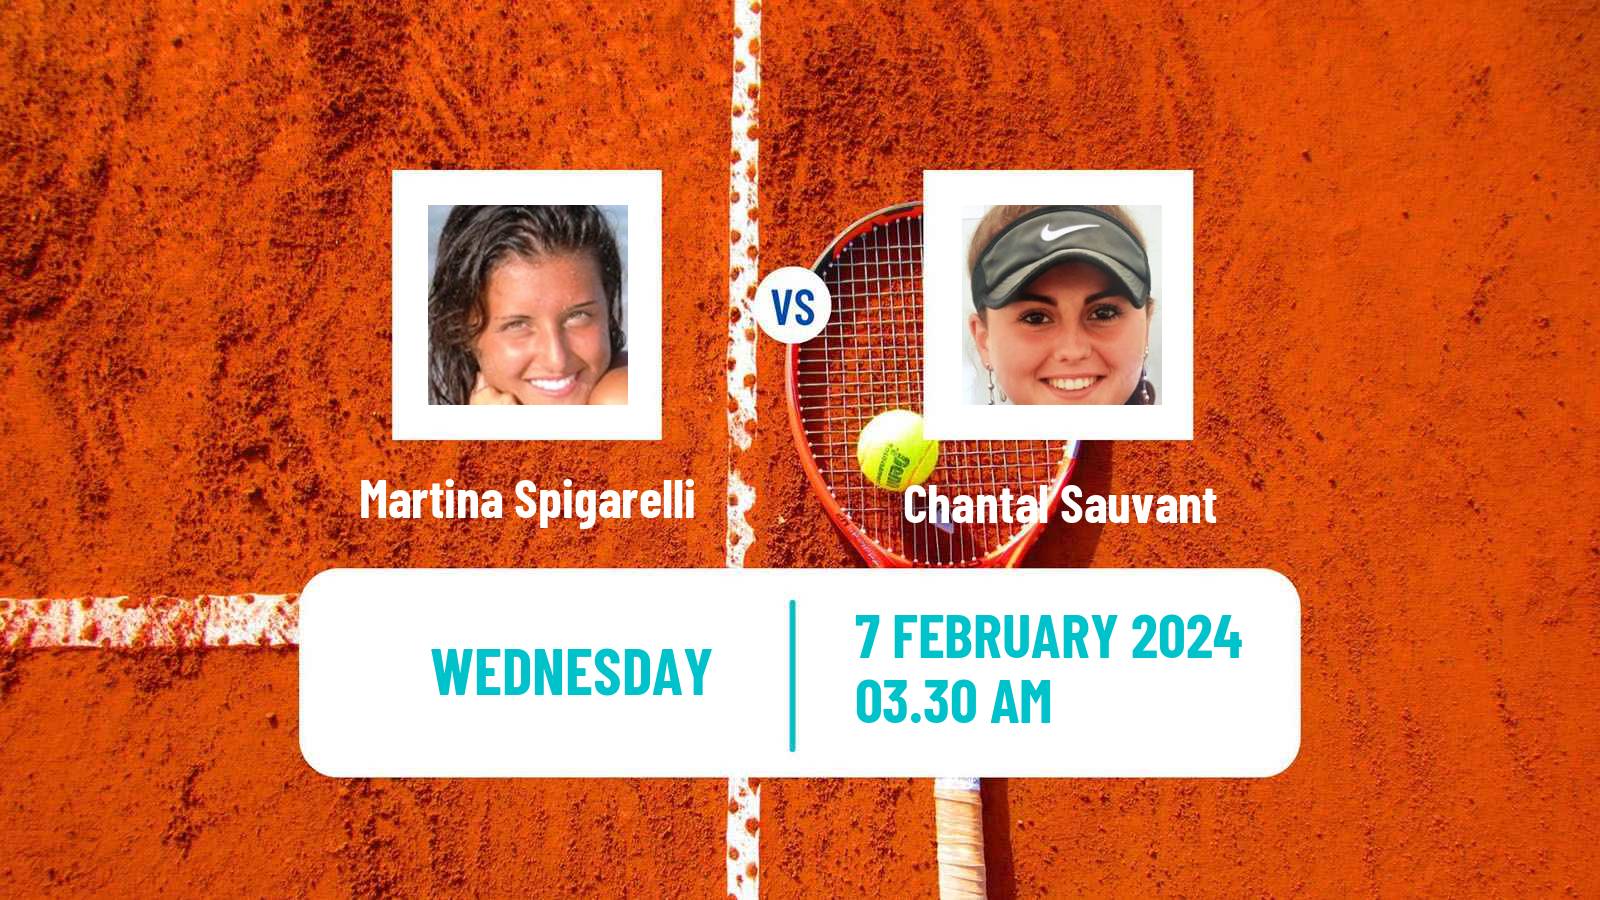 Tennis ITF W15 Monastir 4 Women Martina Spigarelli - Chantal Sauvant